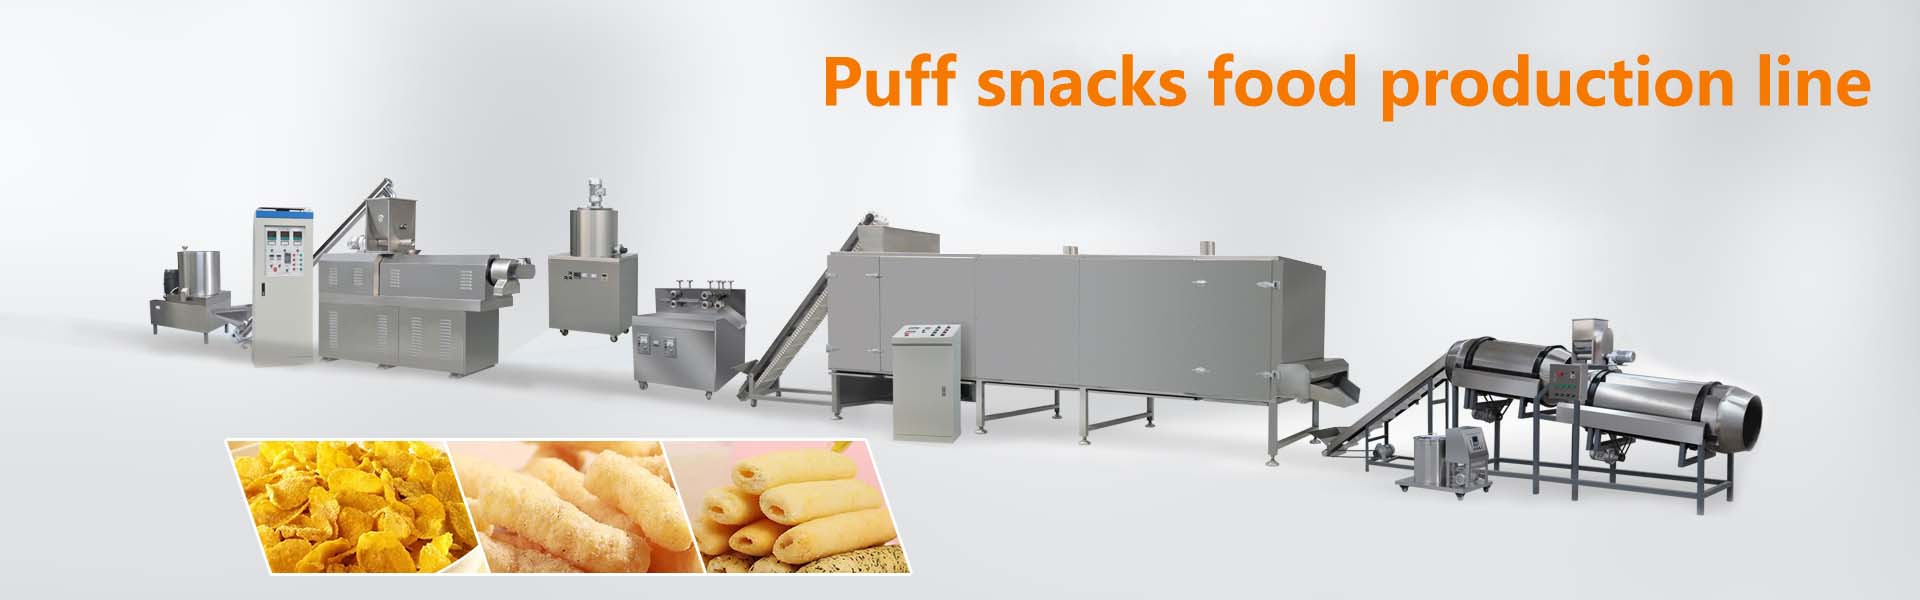 snack food machine.jpg